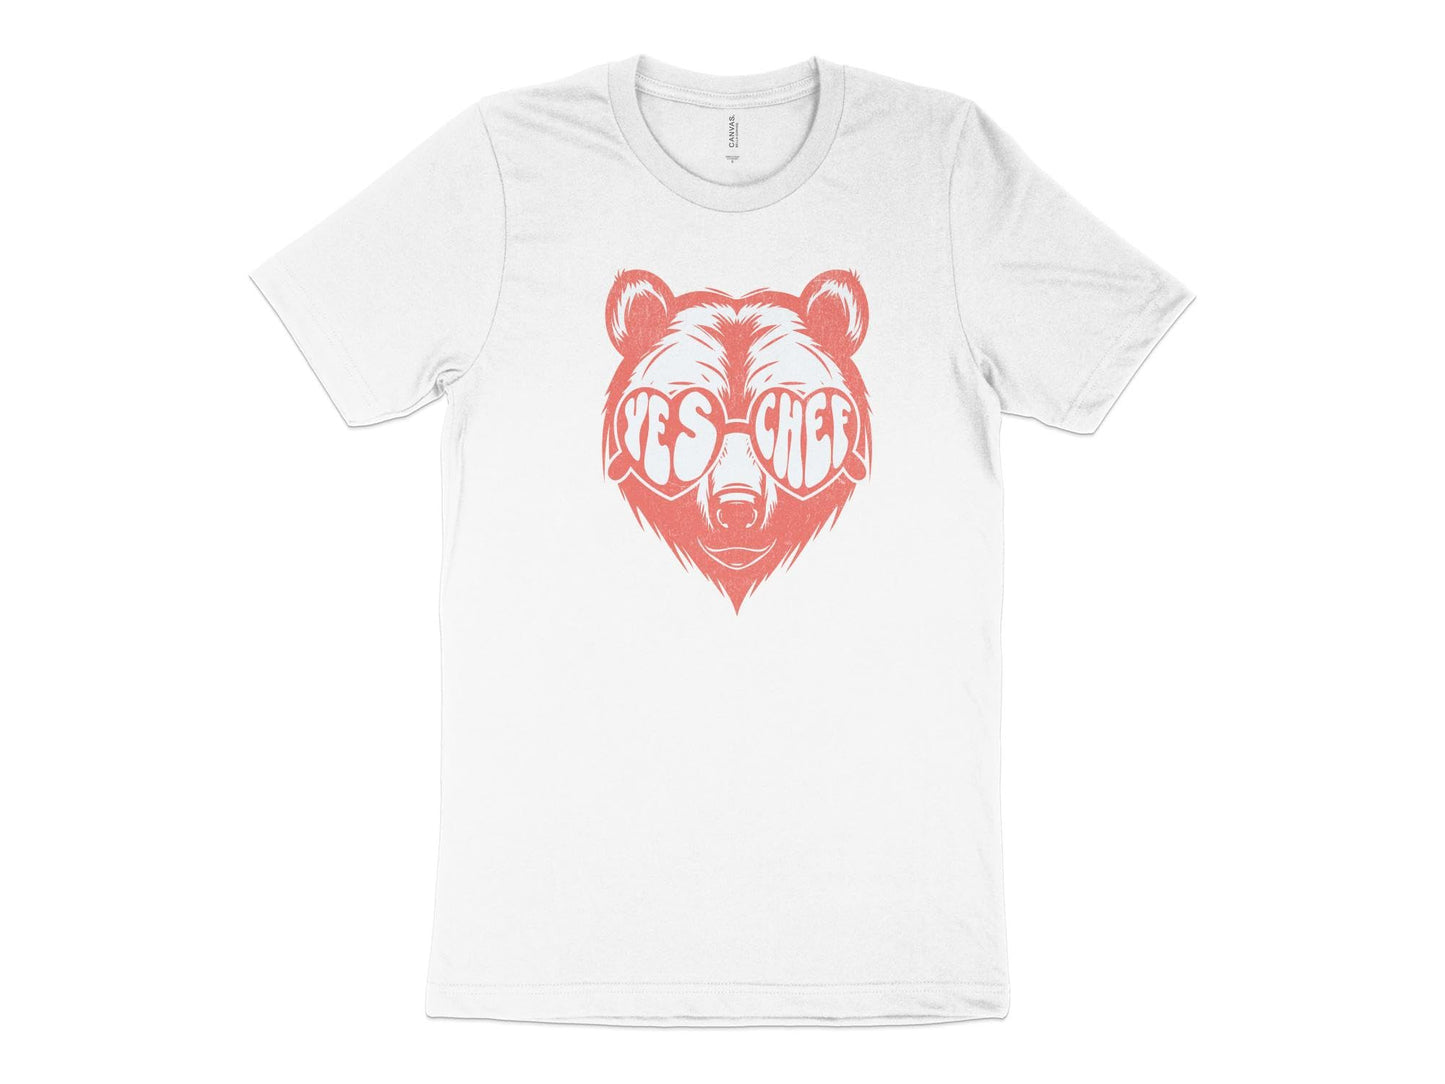 Yes Chef Shirt, Bear Shirt, Yes Chef, Bear